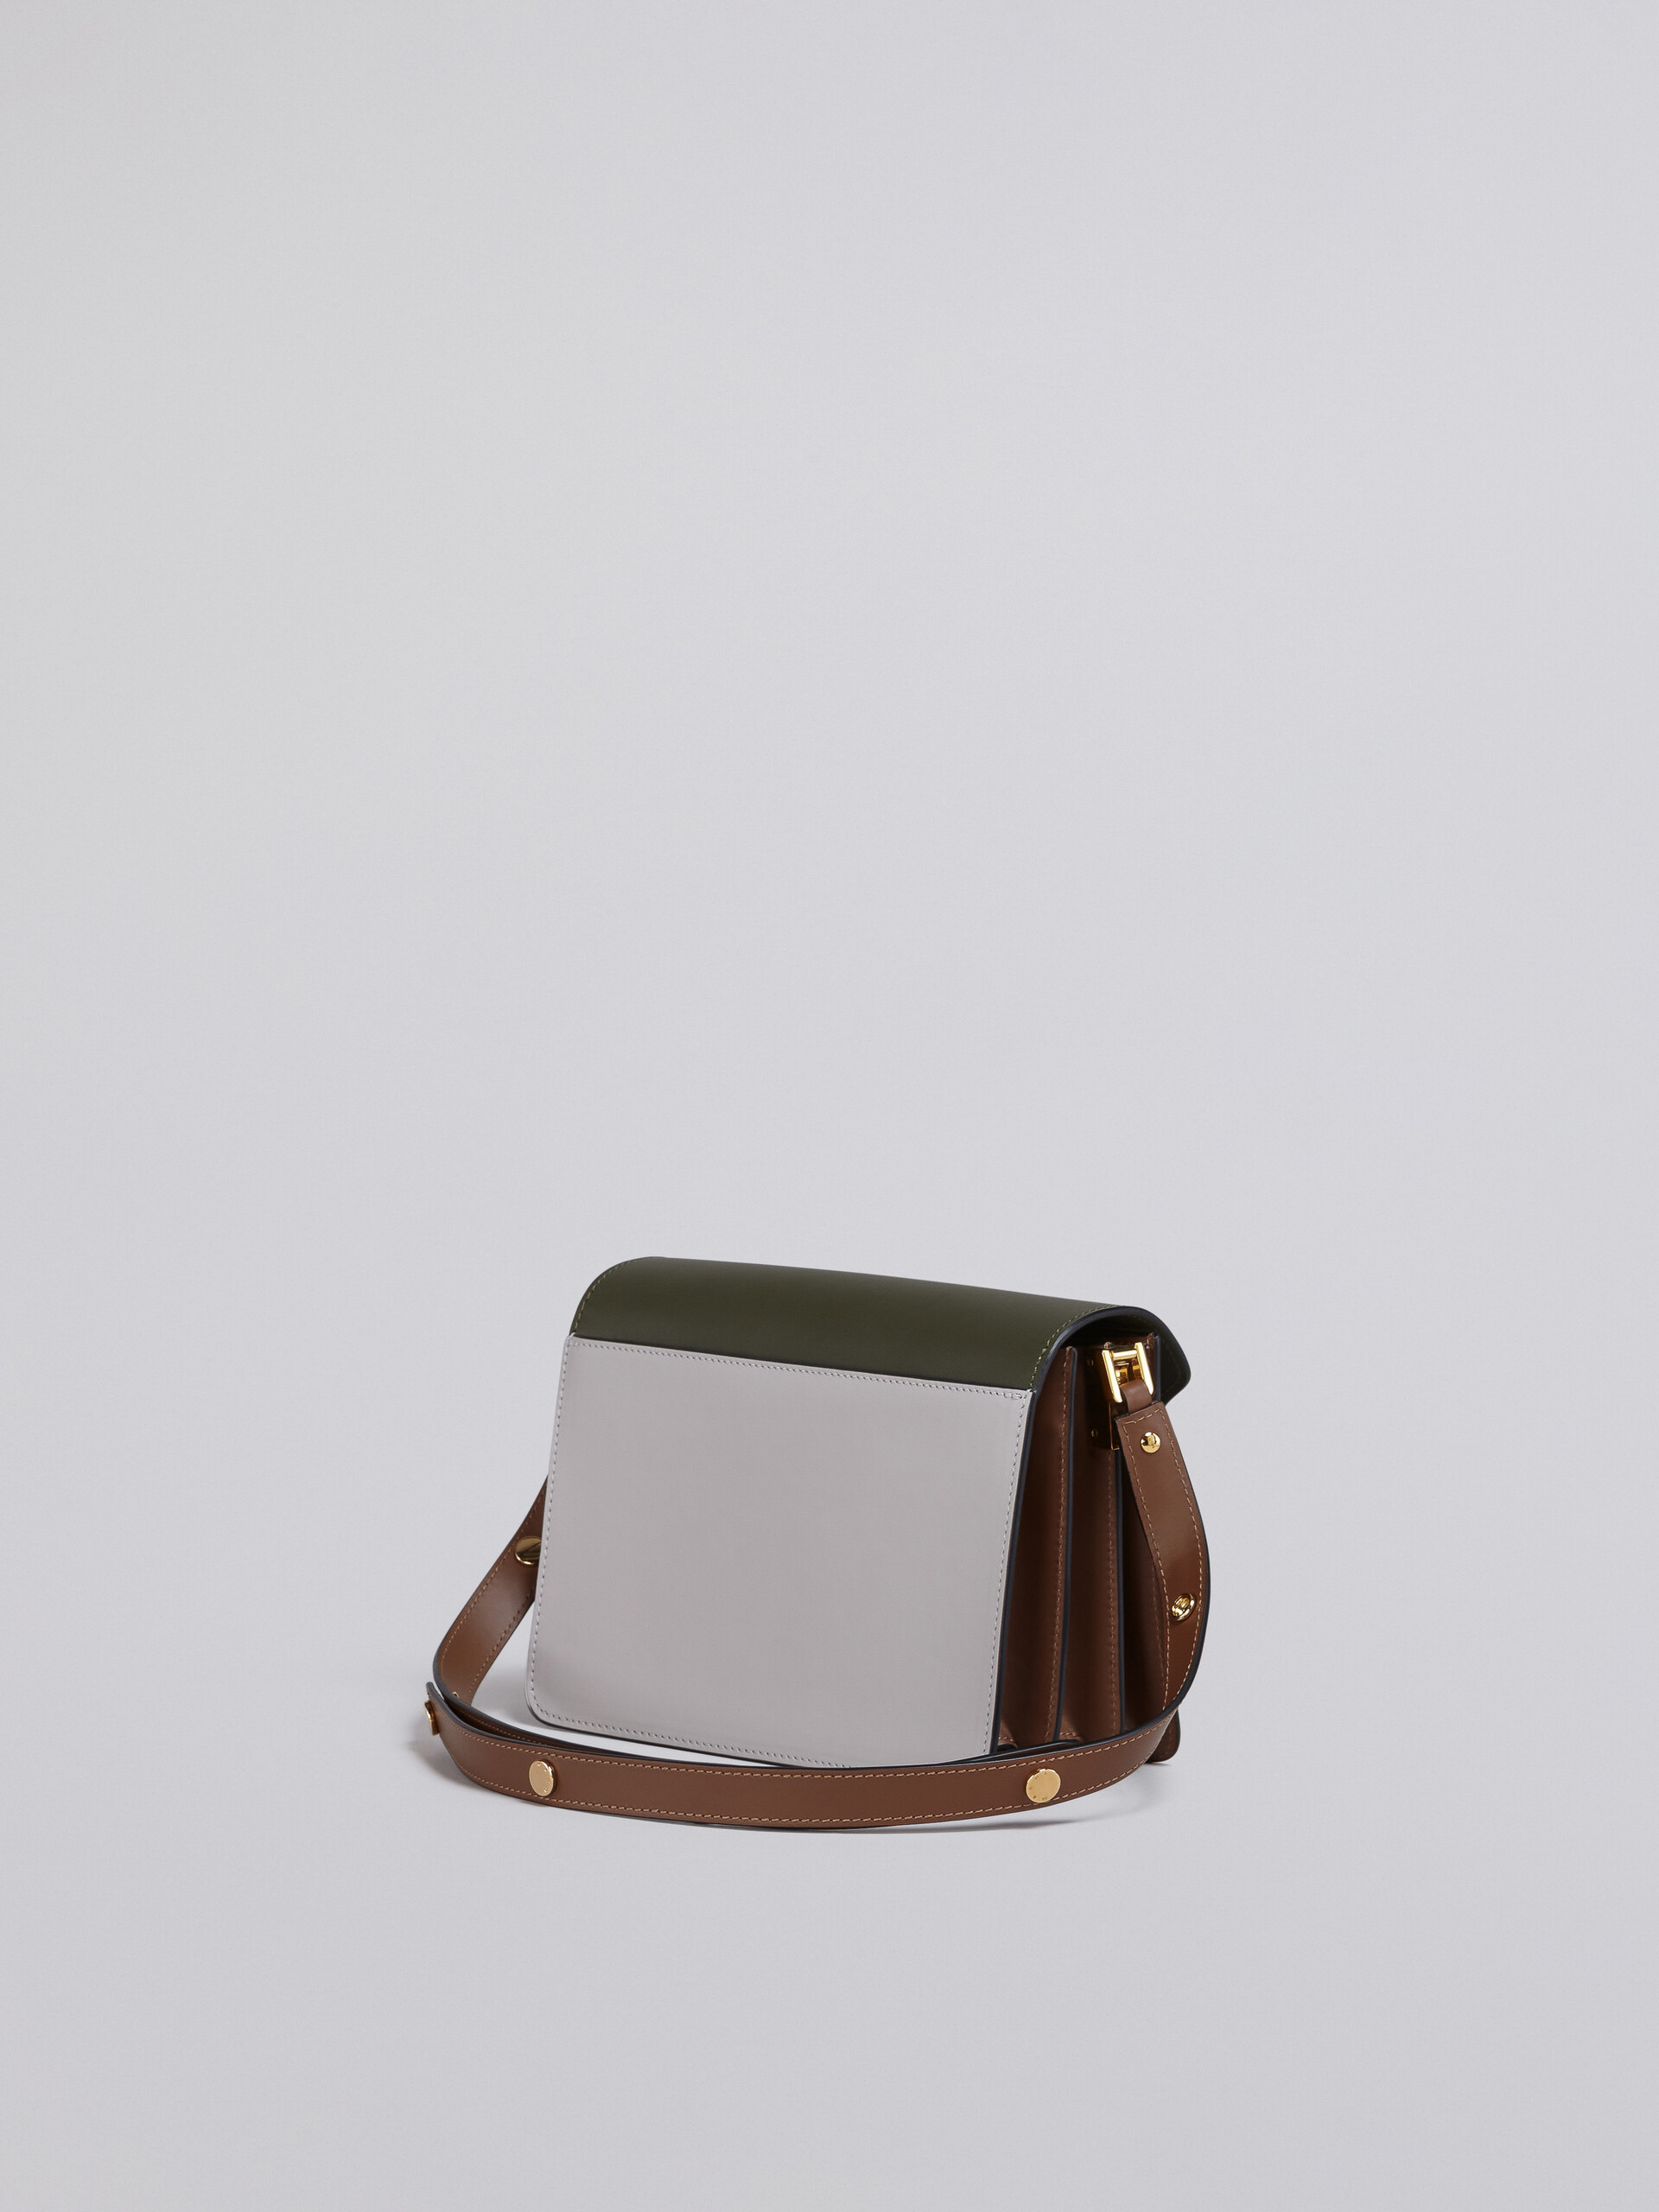 TRUNK medium bag in green grey and brown leather - Shoulder Bag - Image 2